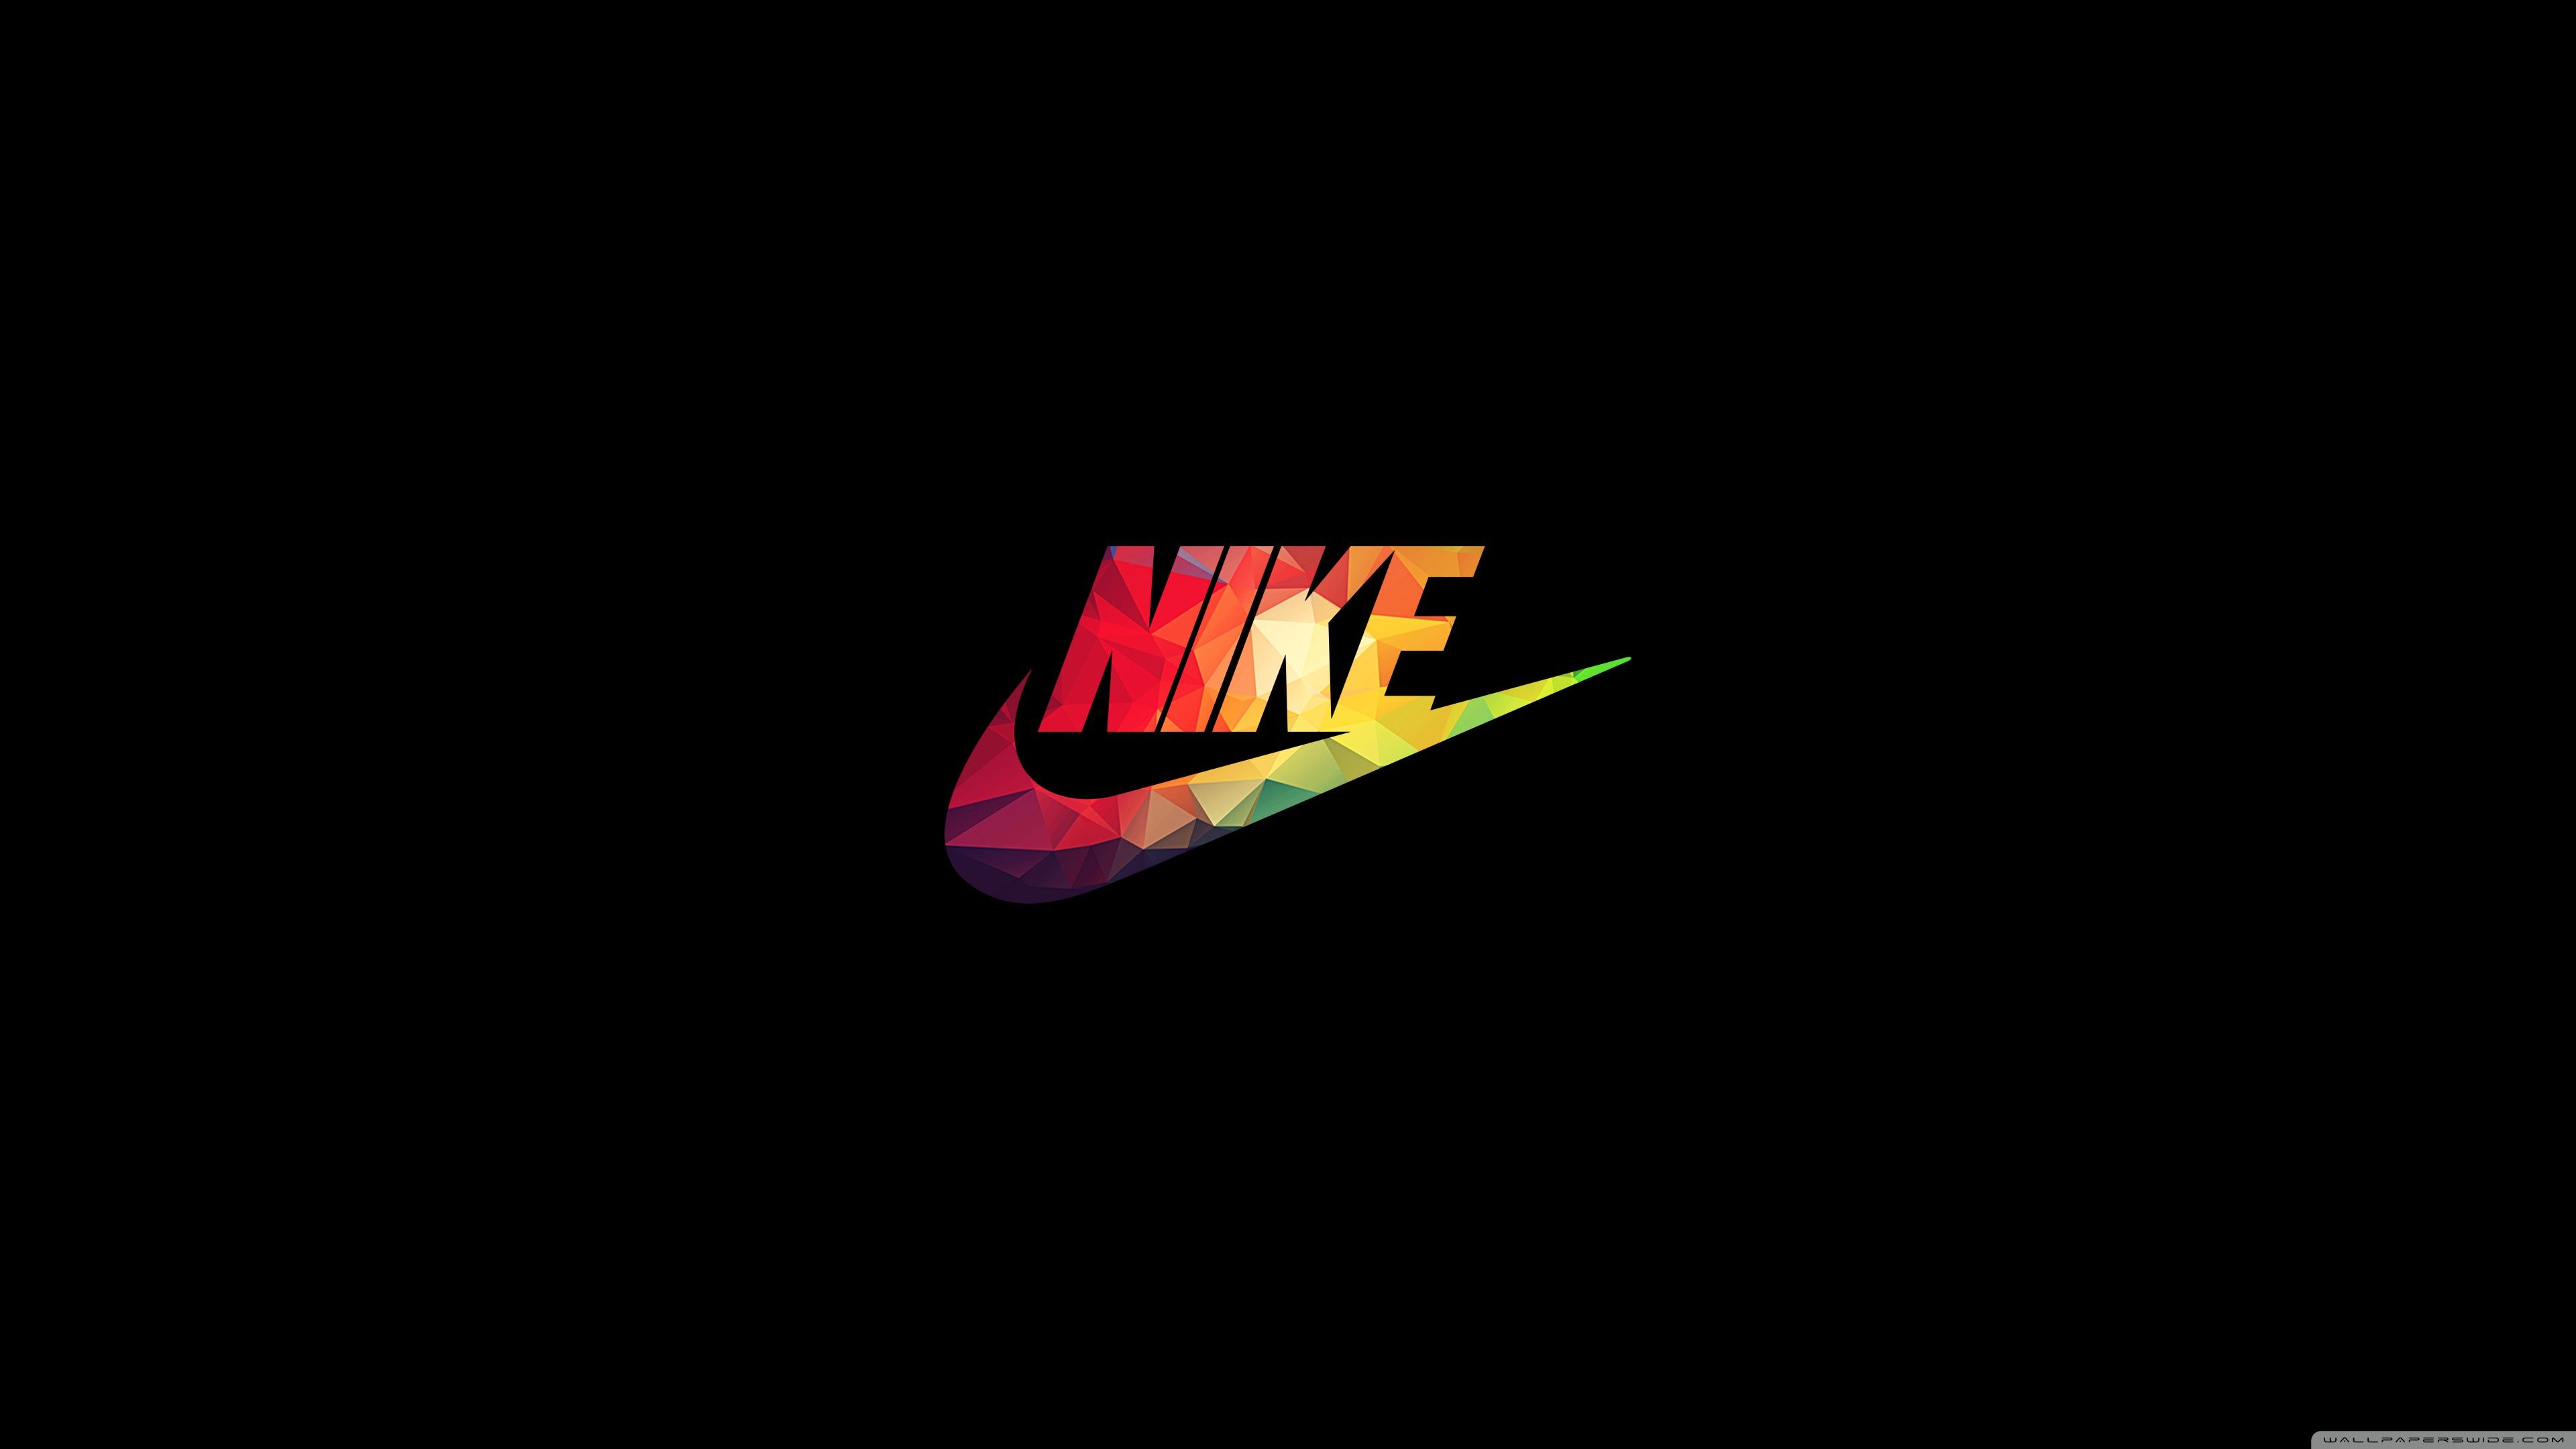 bar Slager Verliefd 33+] Nike 4k Wallpapers - WallpaperSafari